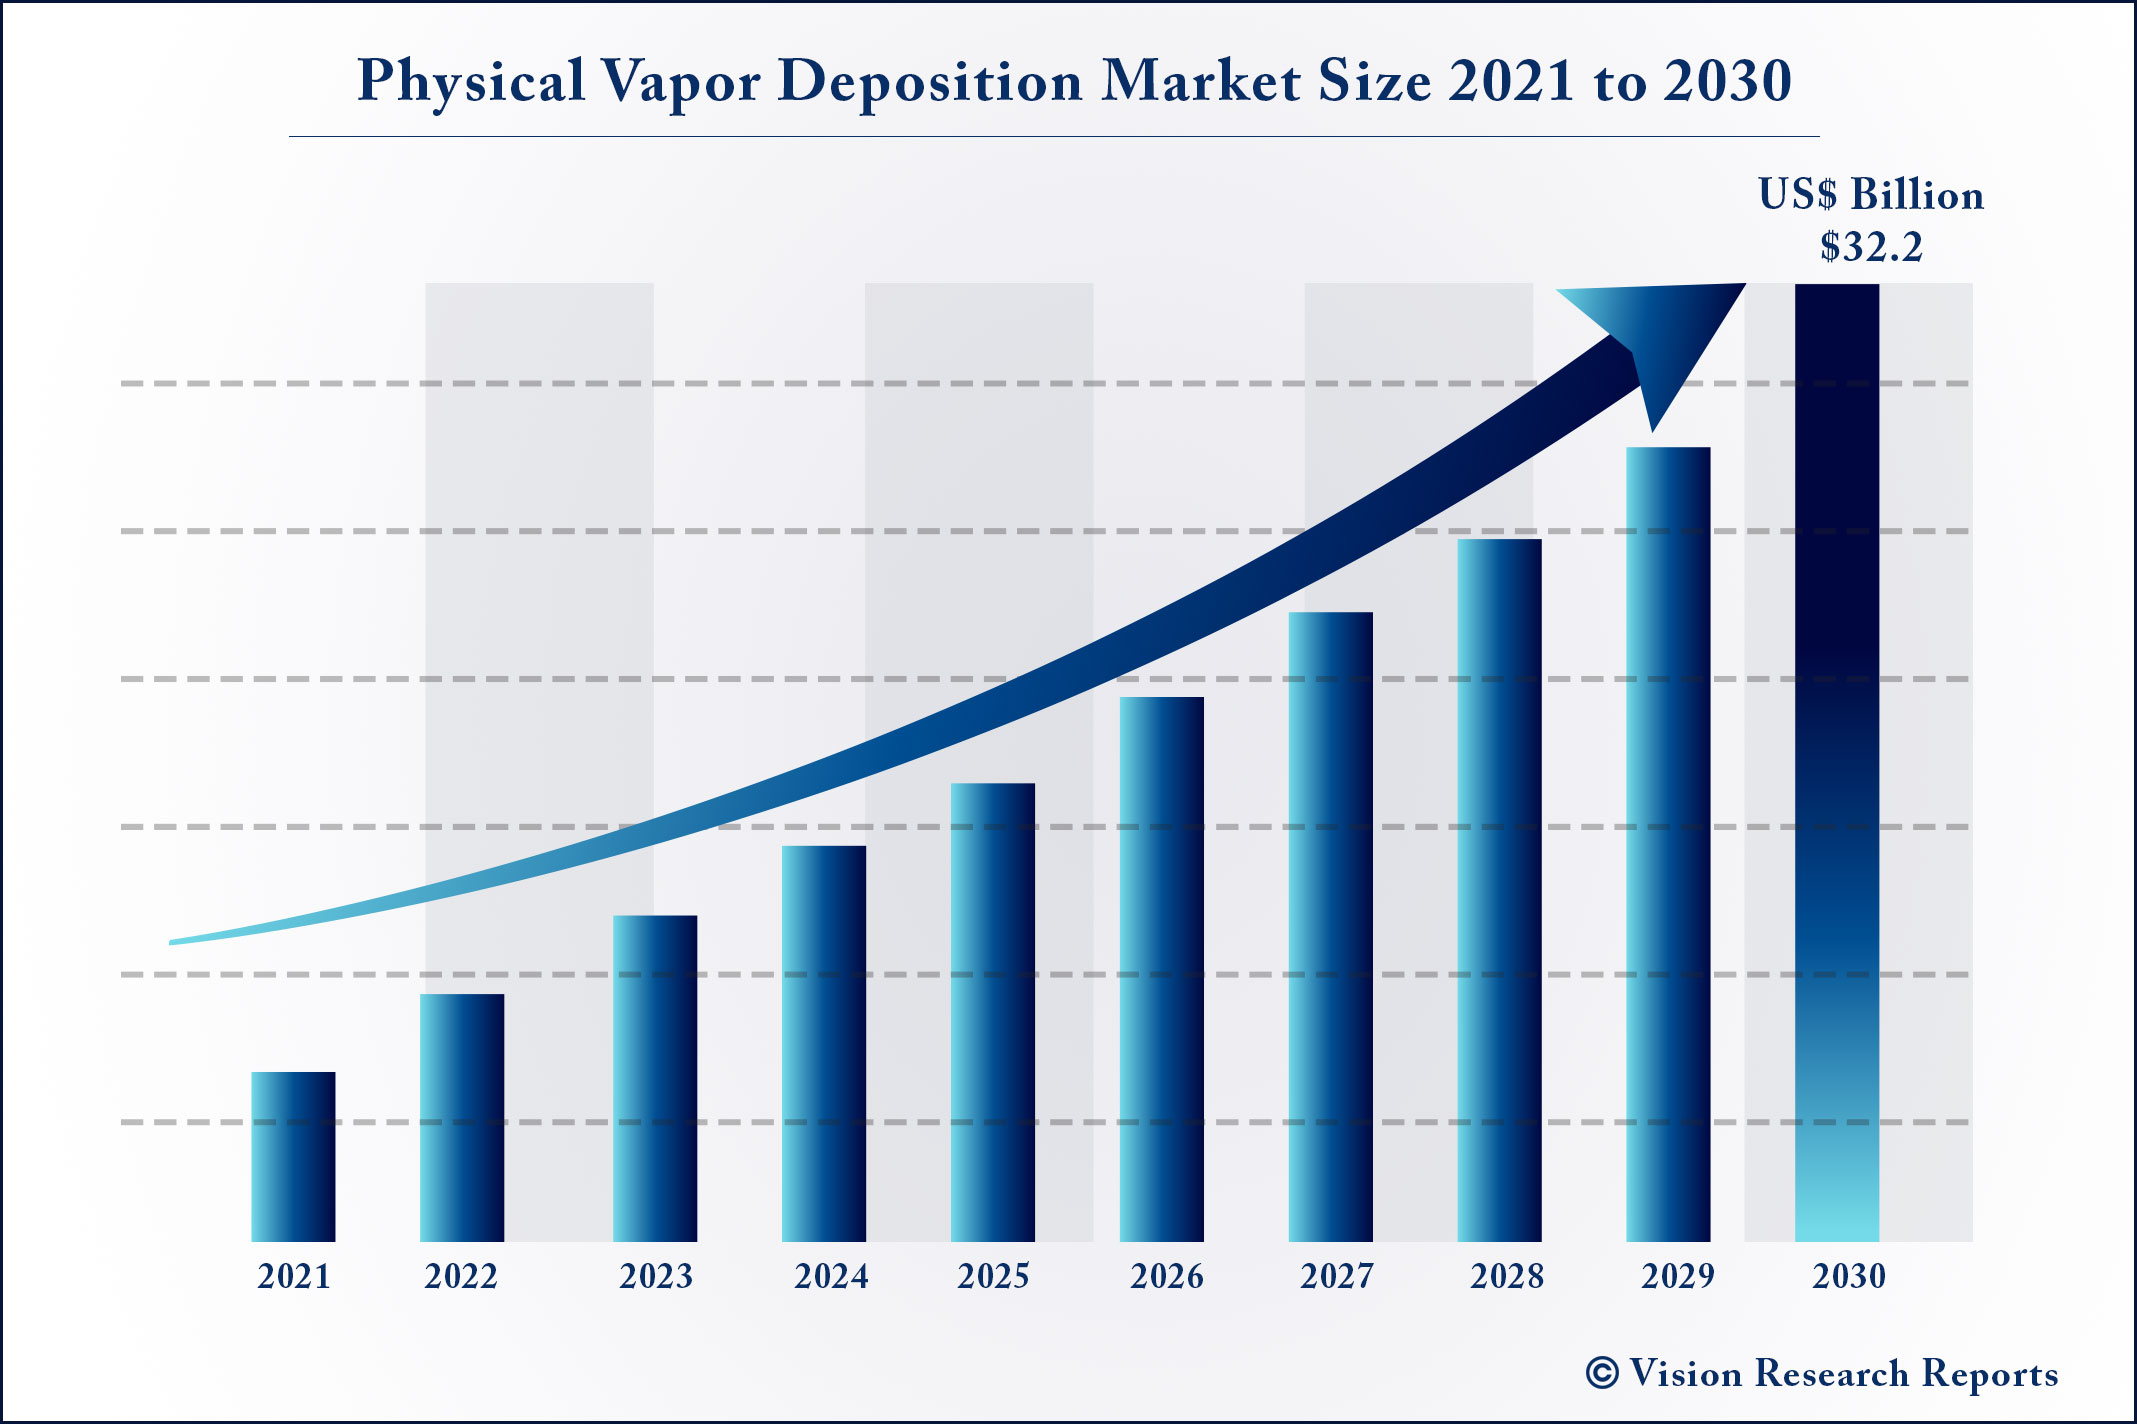 Physical Vapor Deposition Market Size 2021 to 2030